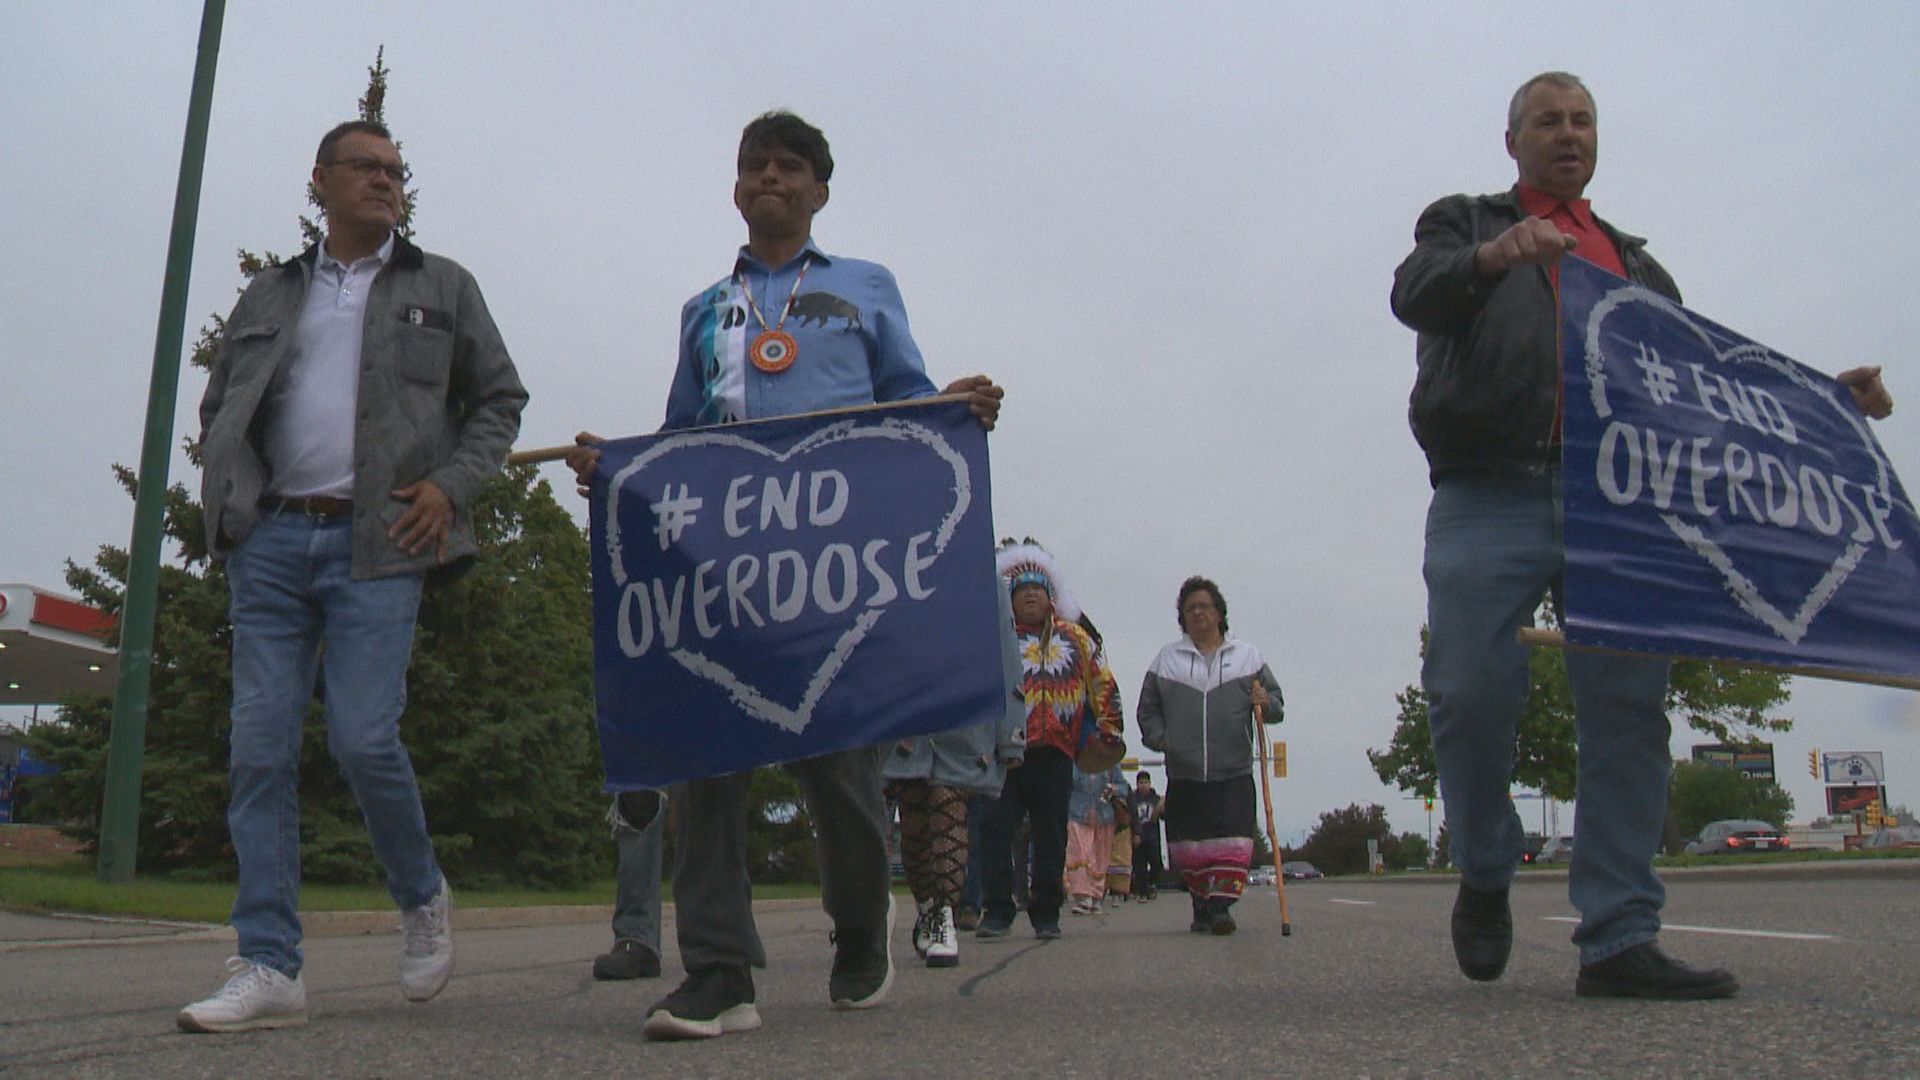 After 300 km, drug overdose awareness walk comes to an end in Regina